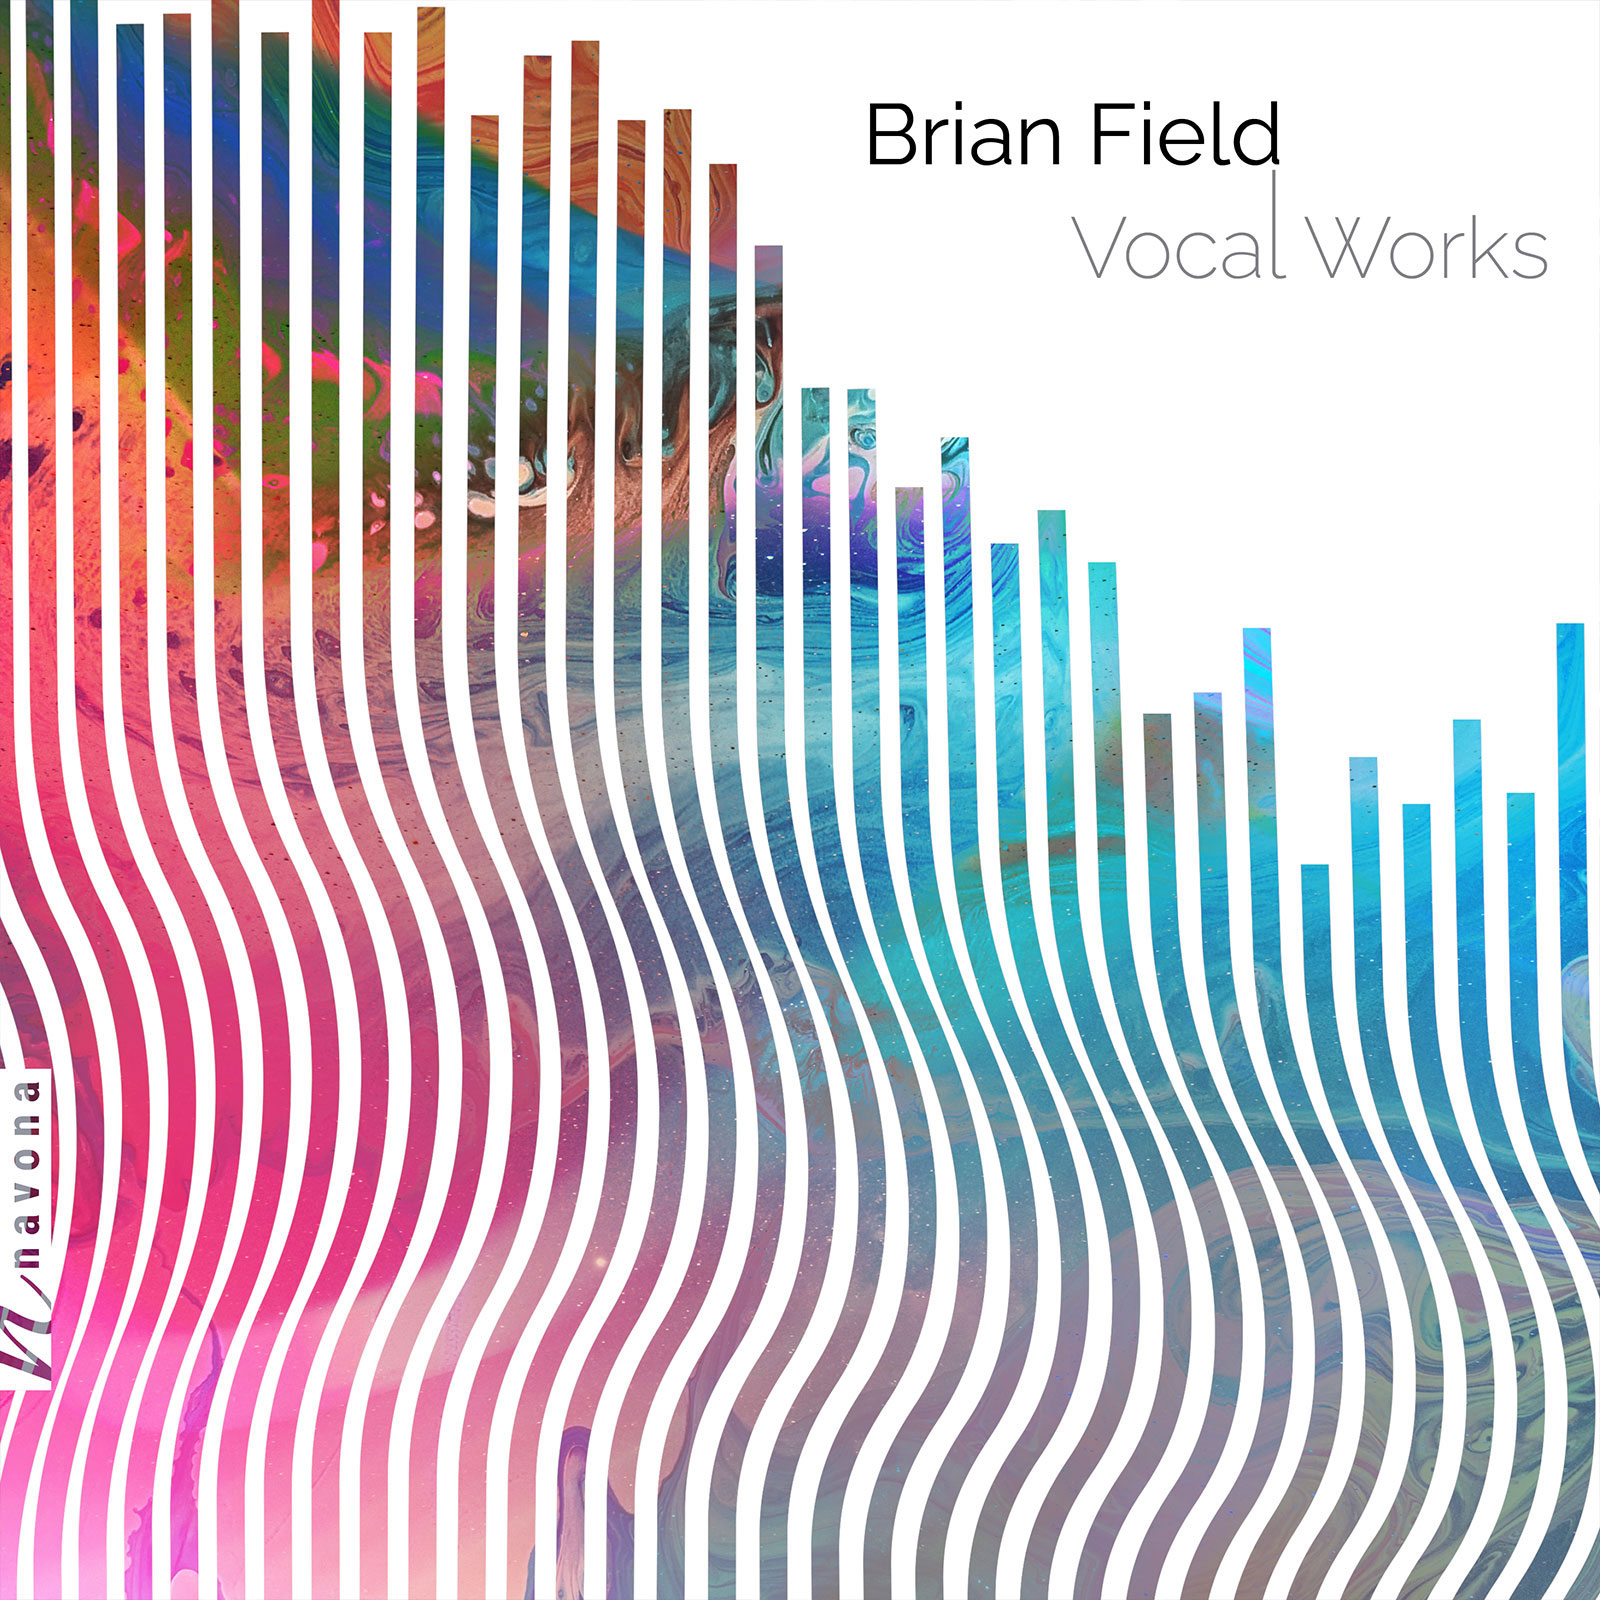 LIT Talent Awards - Brian Field - Vocal Works